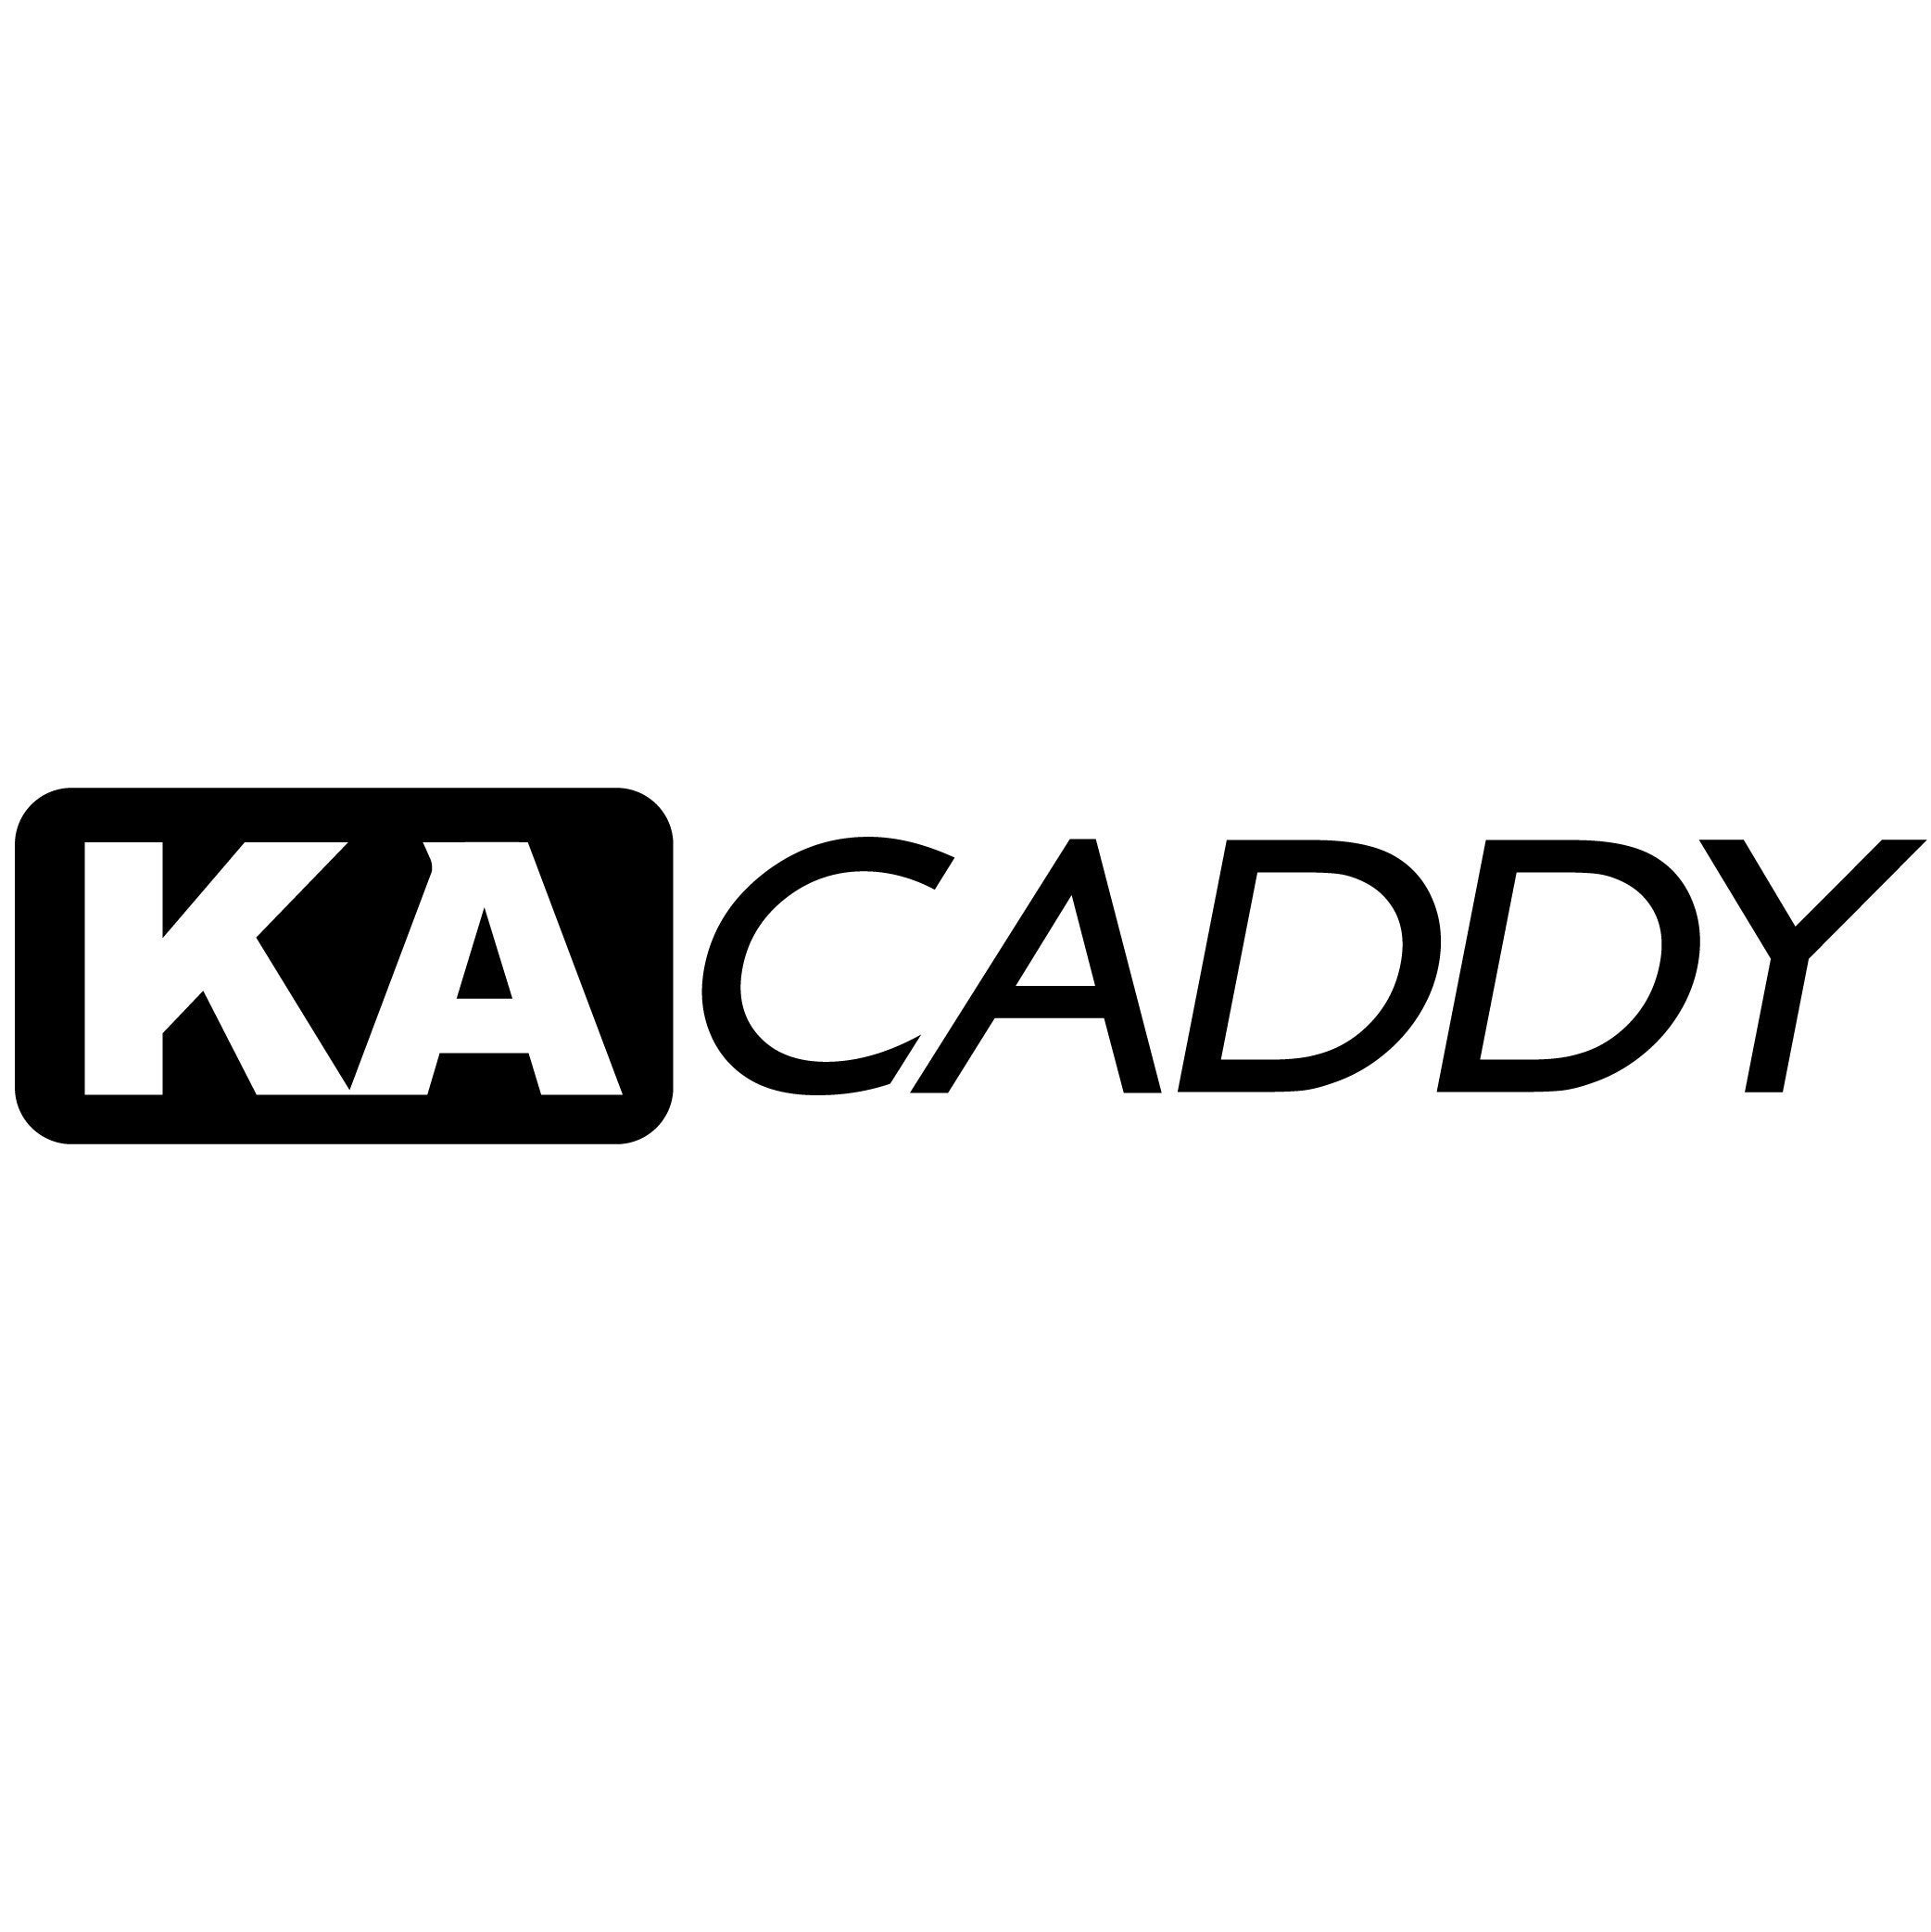 KA Caddy Base for the Kitchenaid® Tilt-head Mixer. 